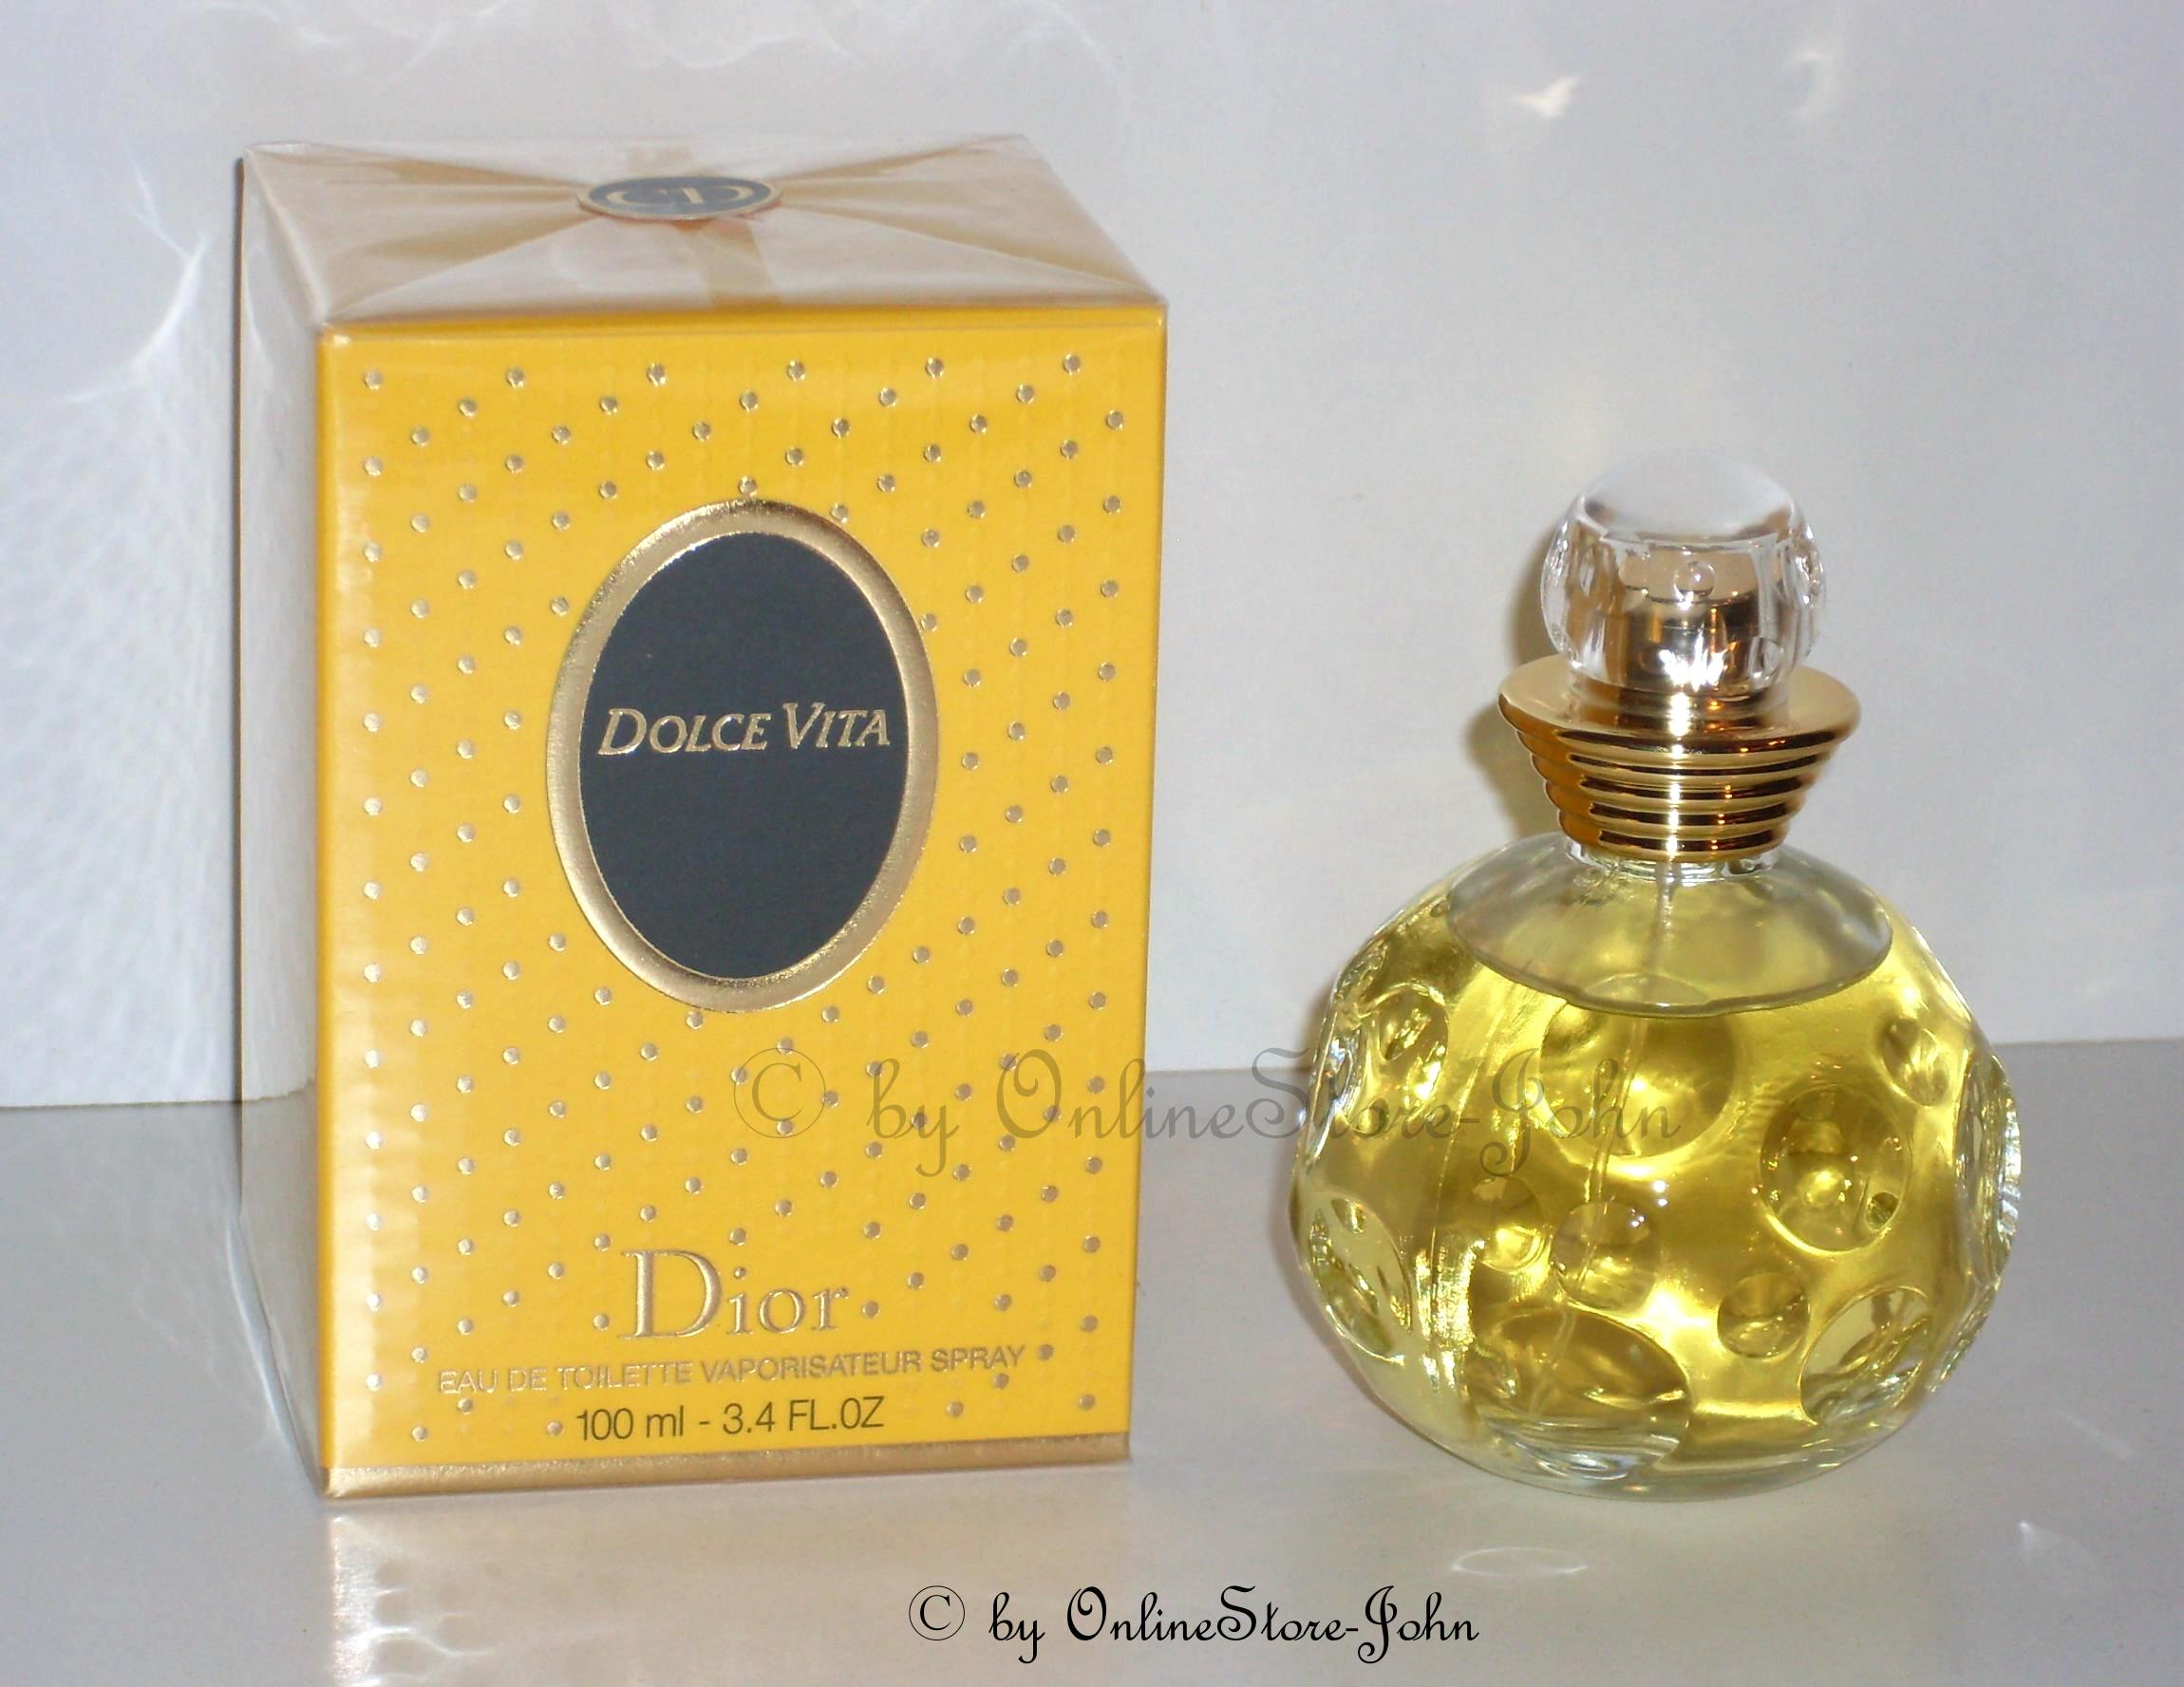 Christian Dior - Dolce Vita - 100ml EDT Eau de Toilette | eBay